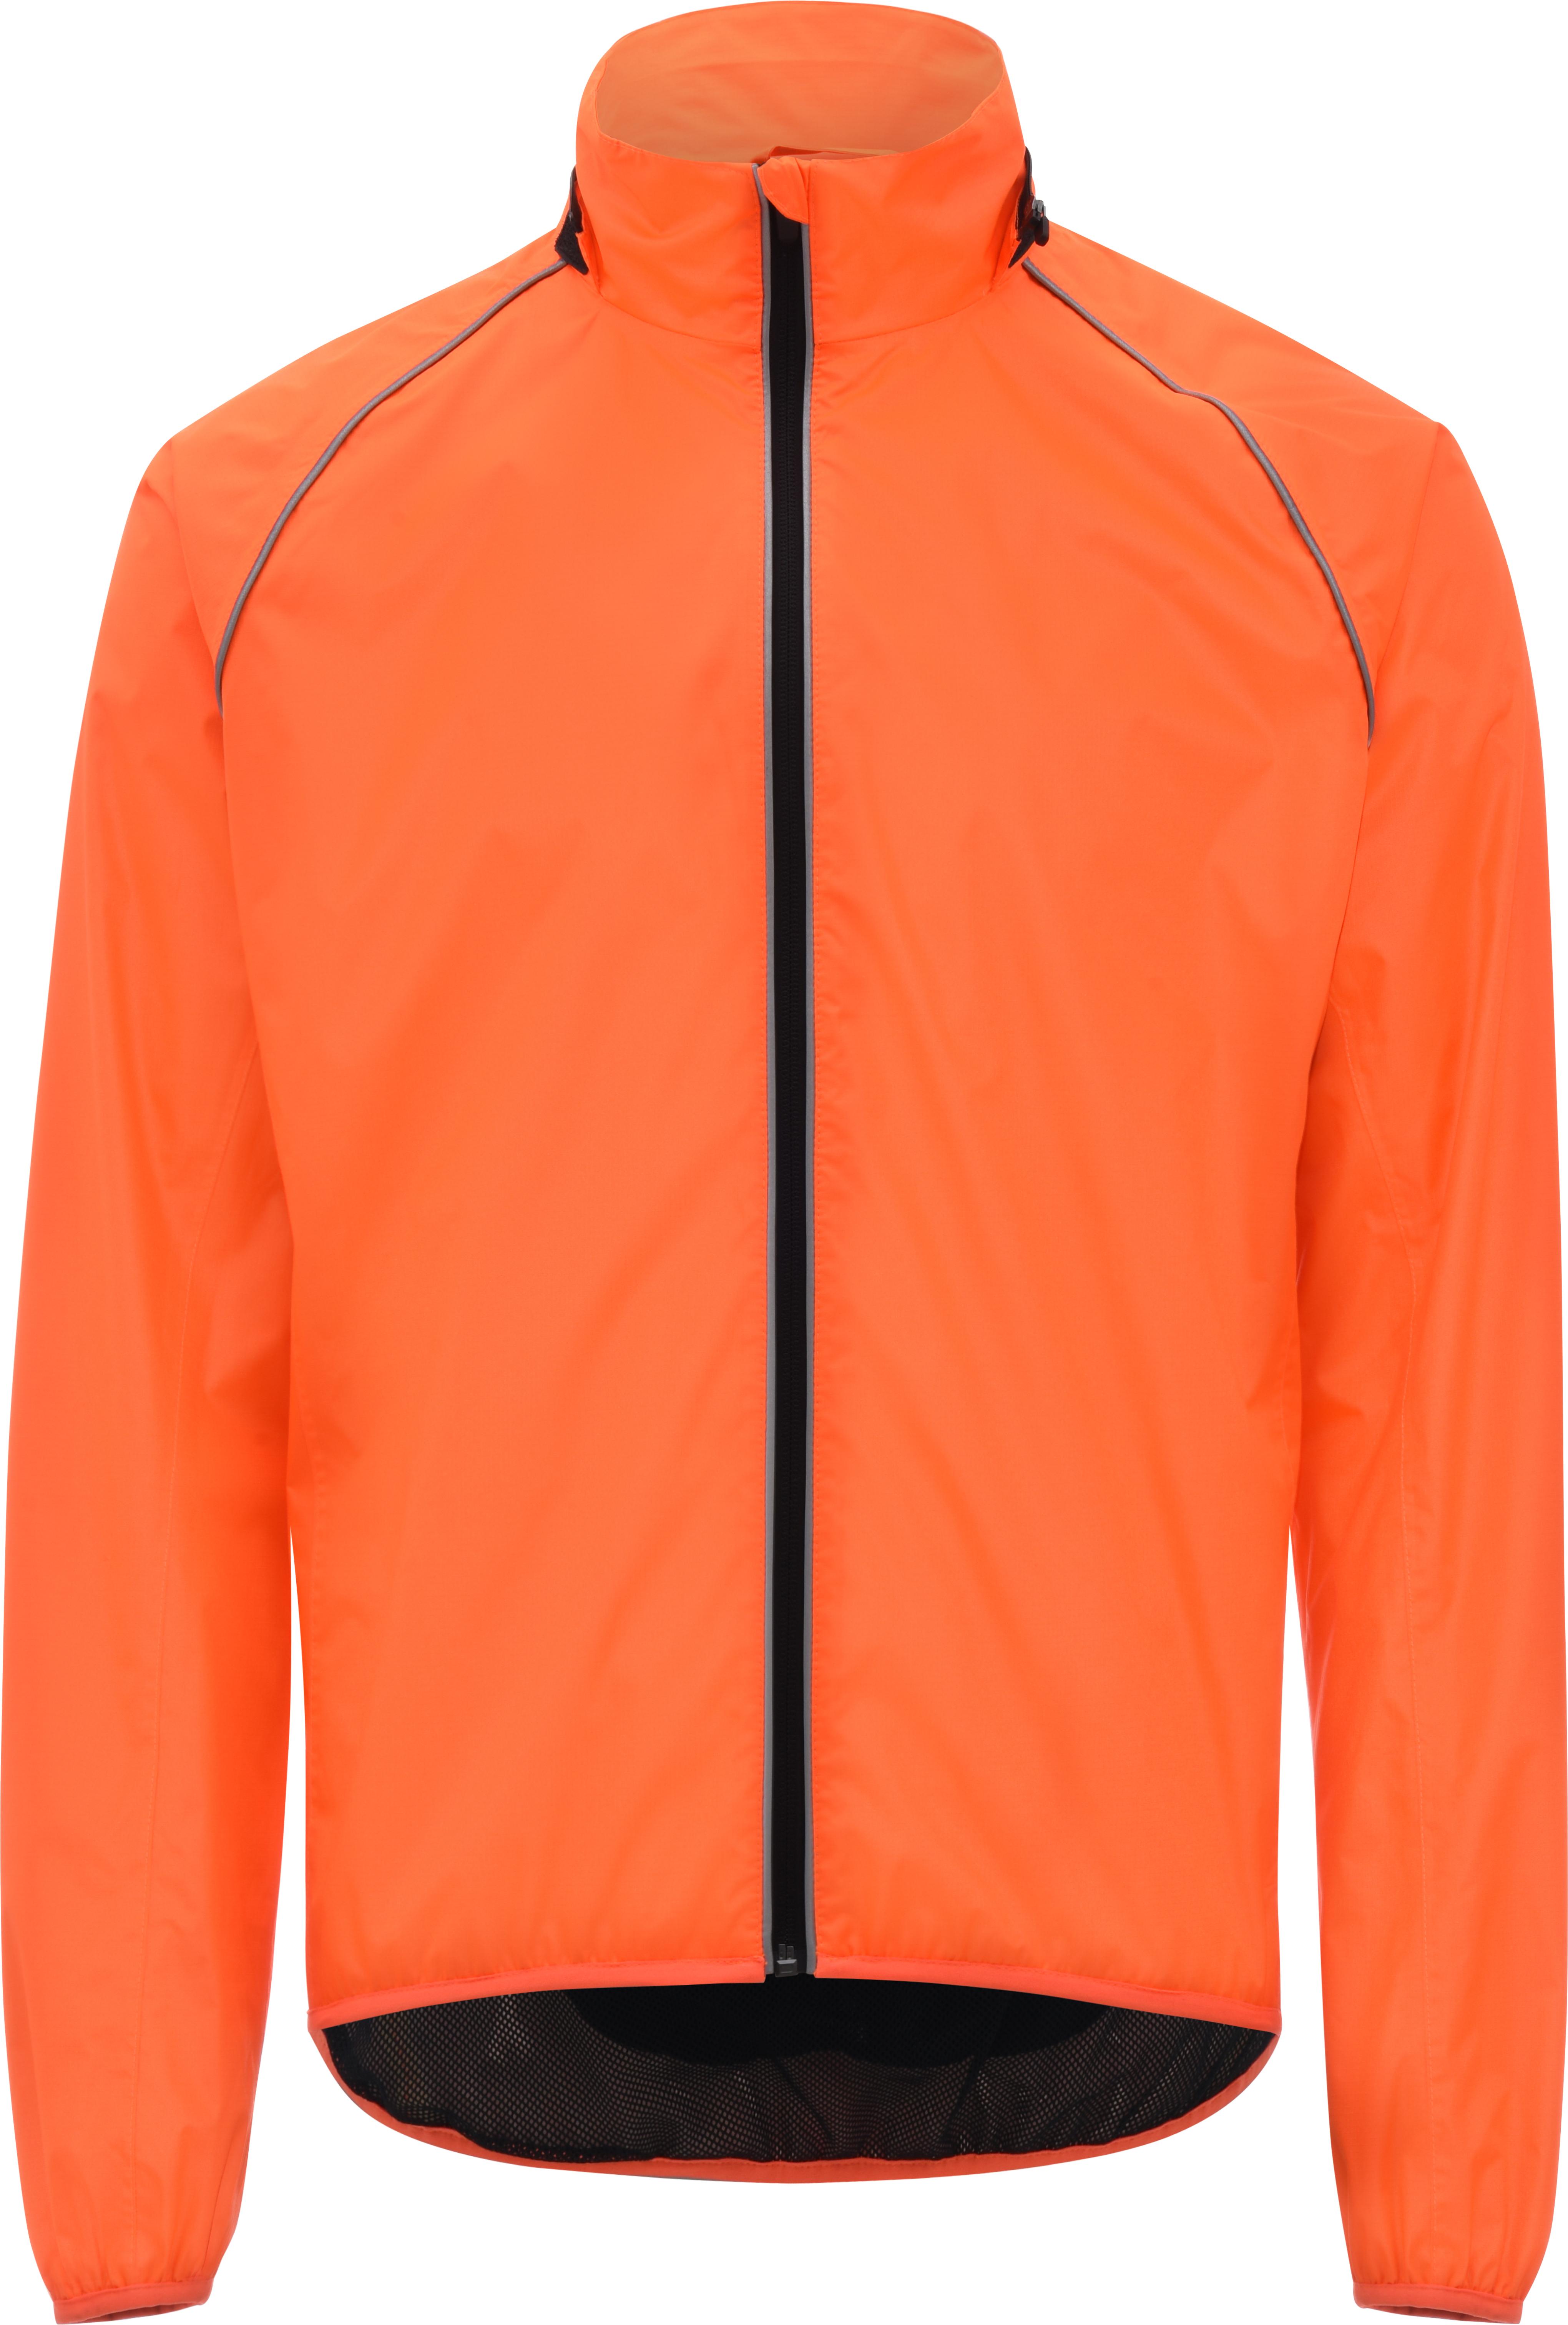 Ridge Unisex Waterproof Jacket - Fluorescent Orange, Xl